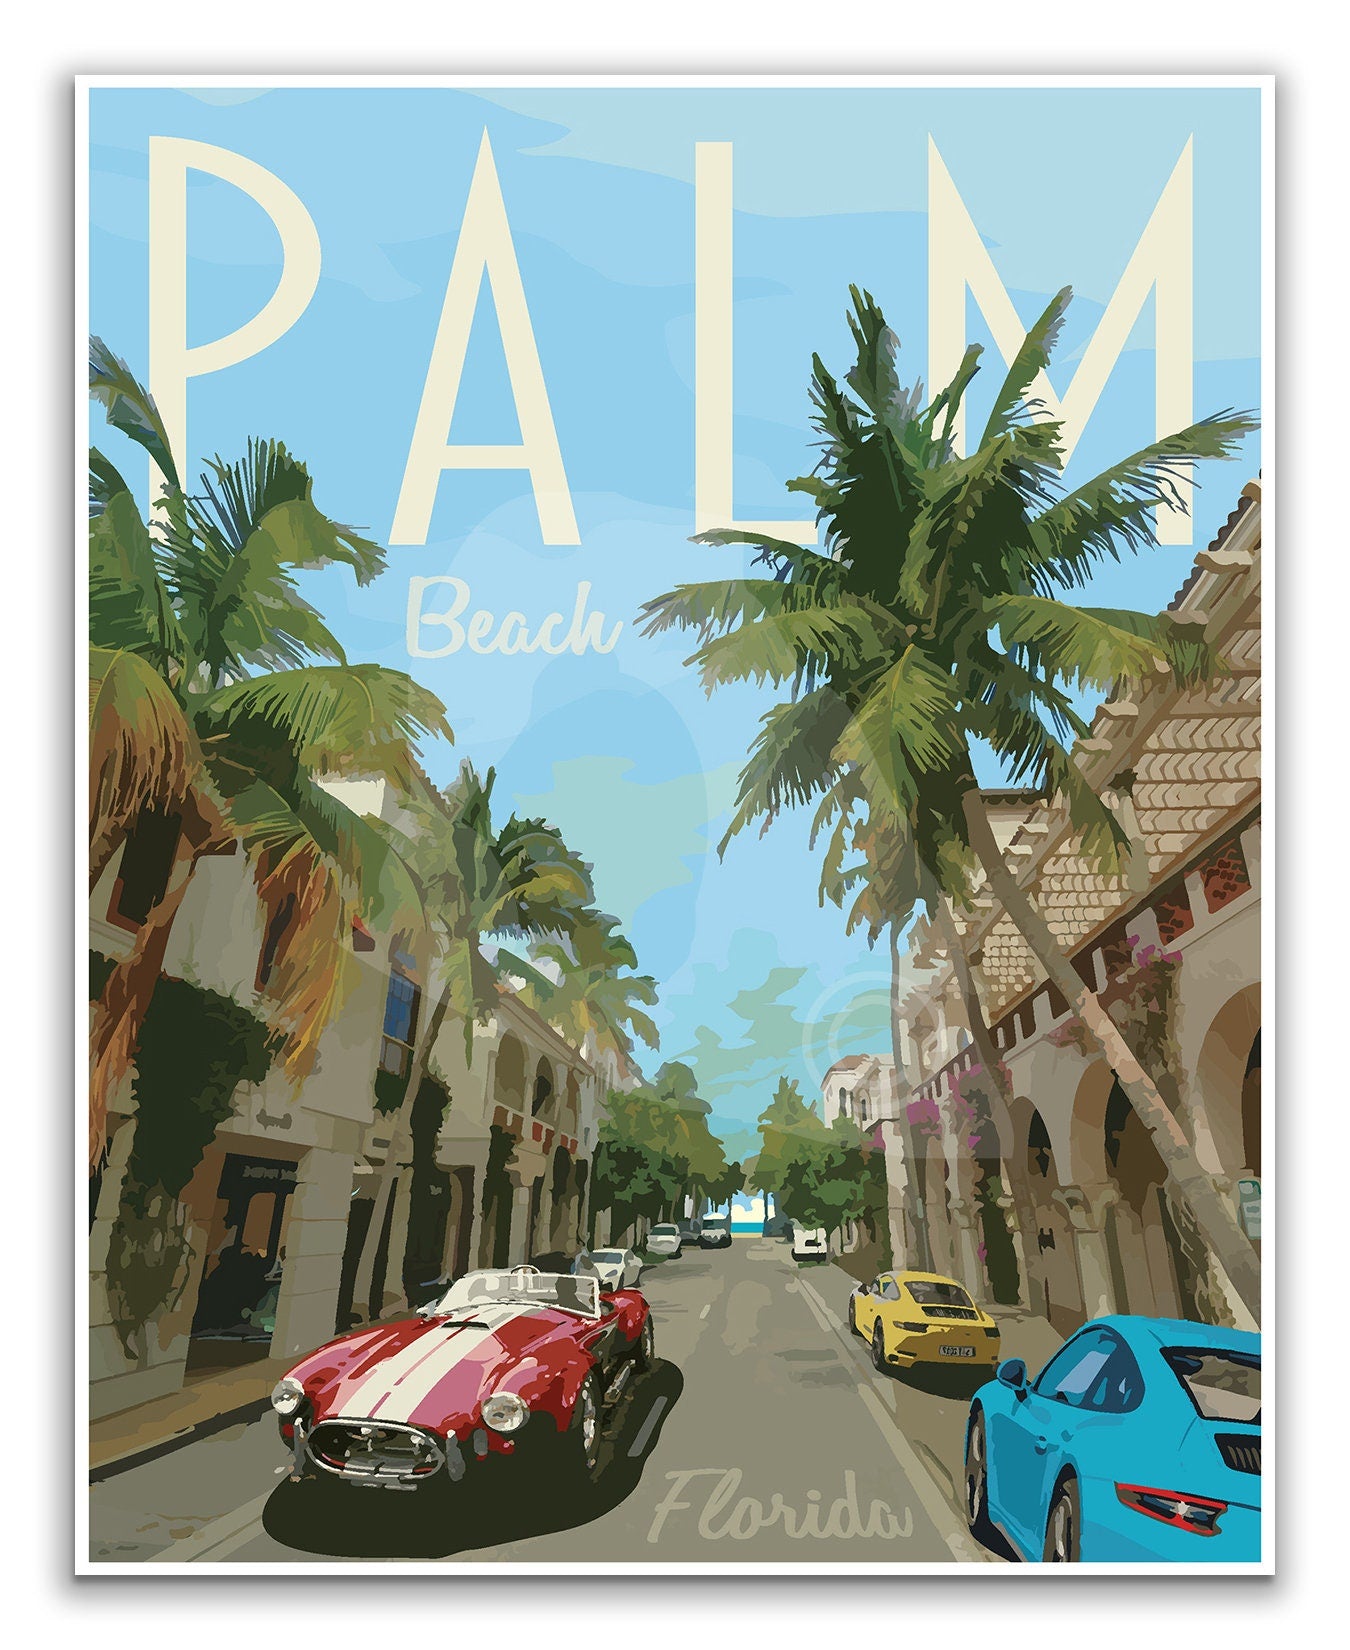 Florida Poster Value Set, Miami Poster, Palm Beach Poster, Everglades National Park Poster, Florida Vintage Style Travel Art, Three Print Value Set